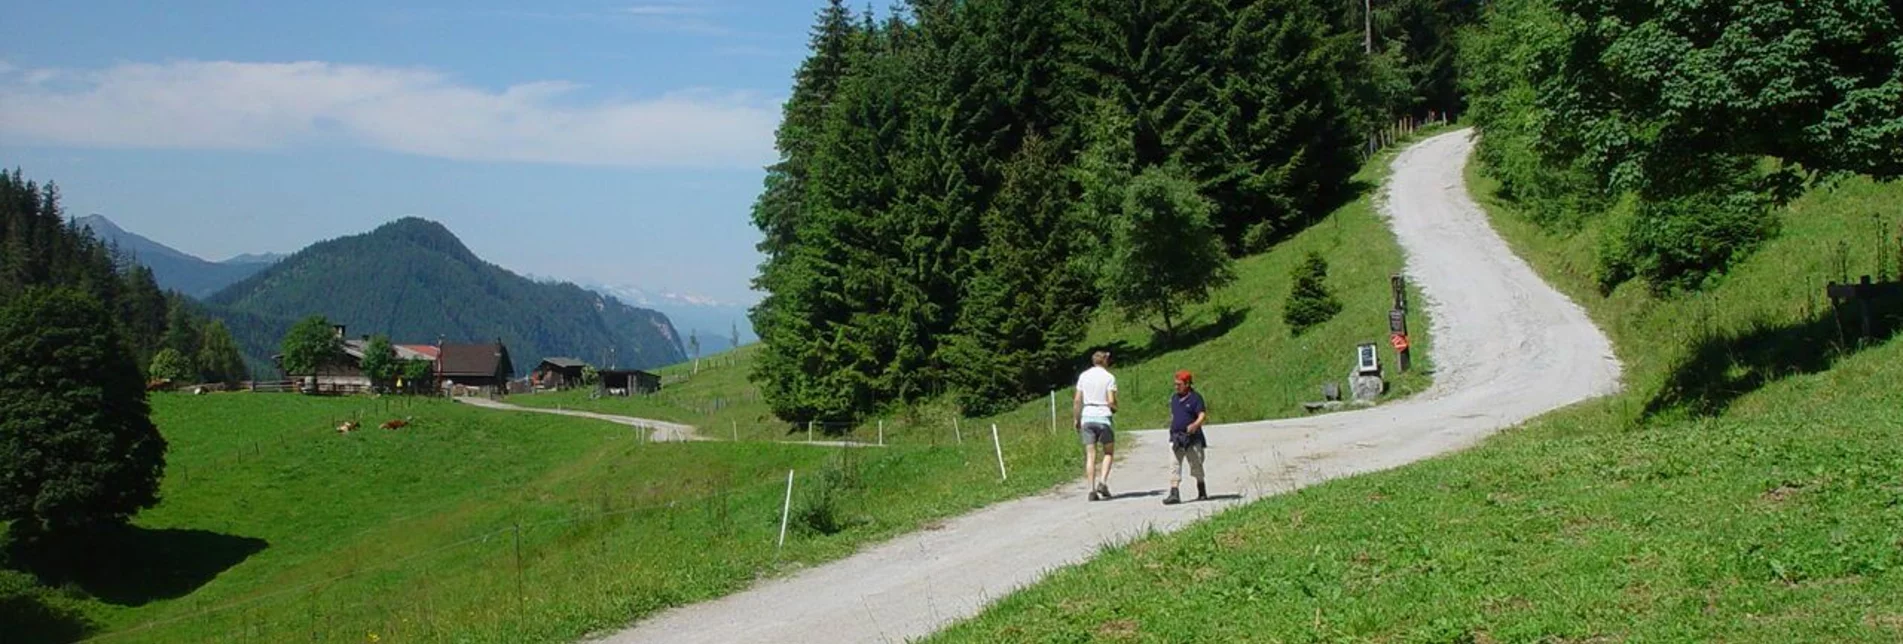 Hiking route Hiking and chalet experience Halserberg-Rittisberg - Touren-Impression #1 | © Schladming-Dachstein